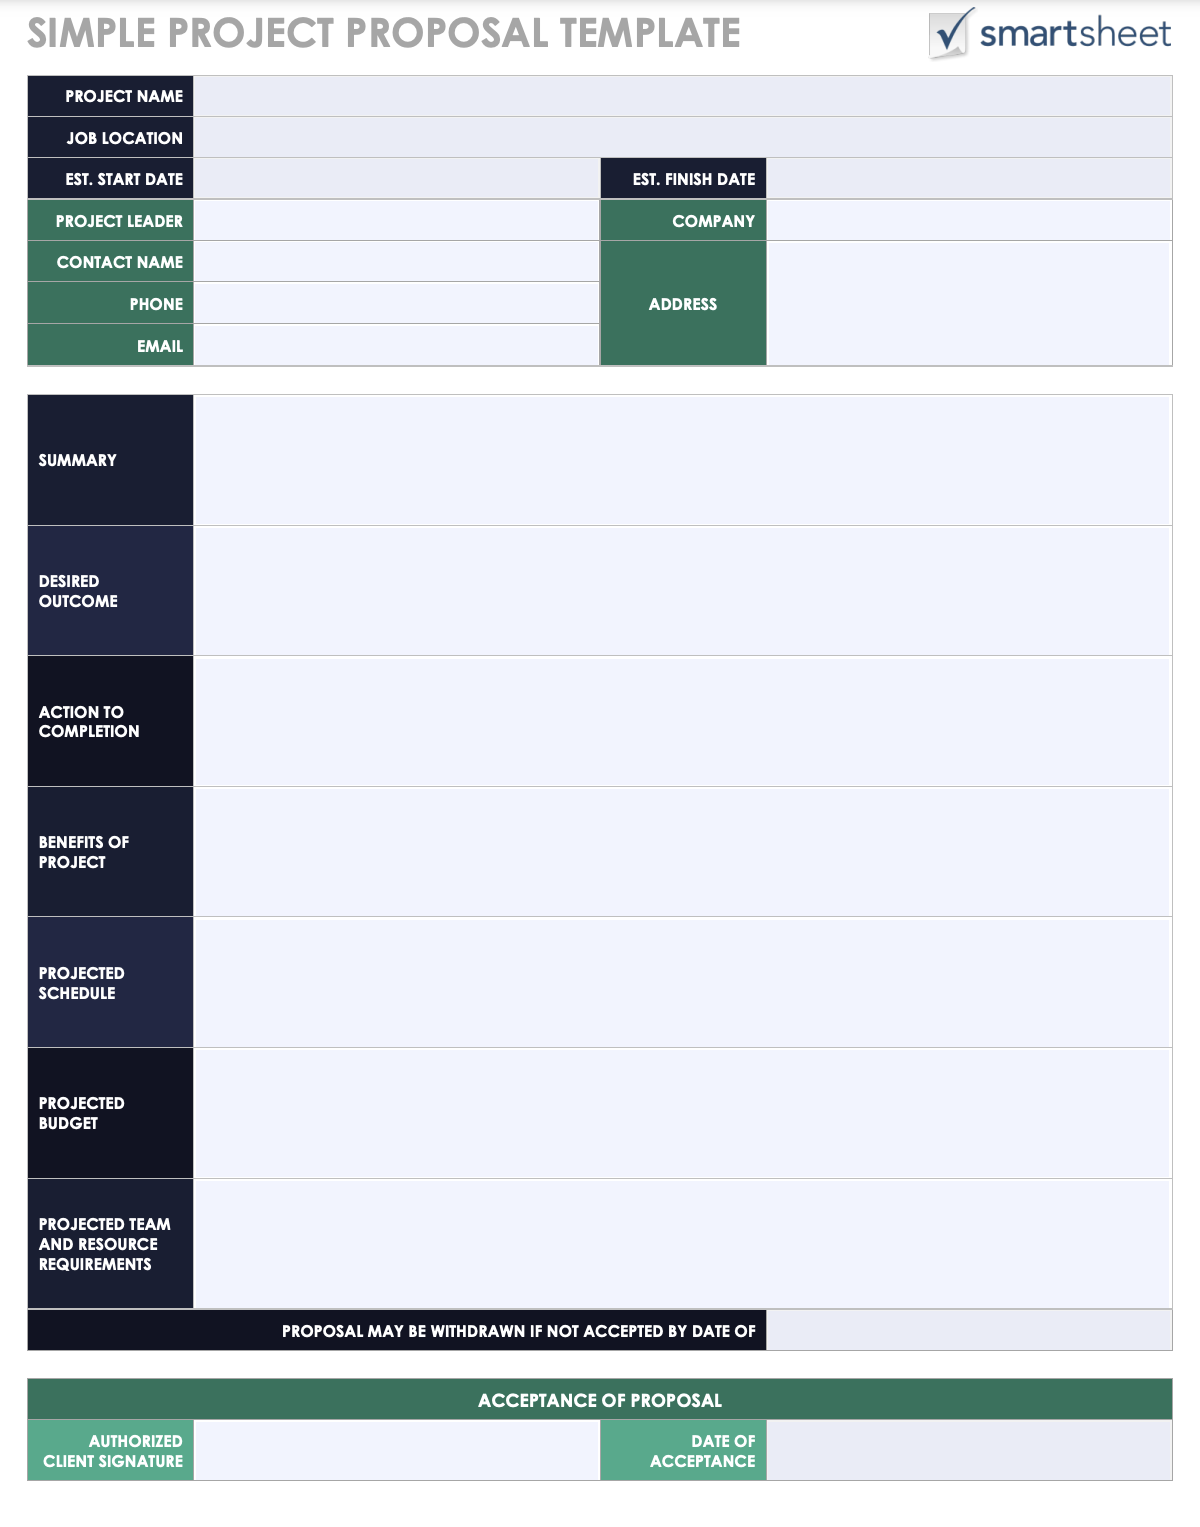 Proposal template of Smartsheet